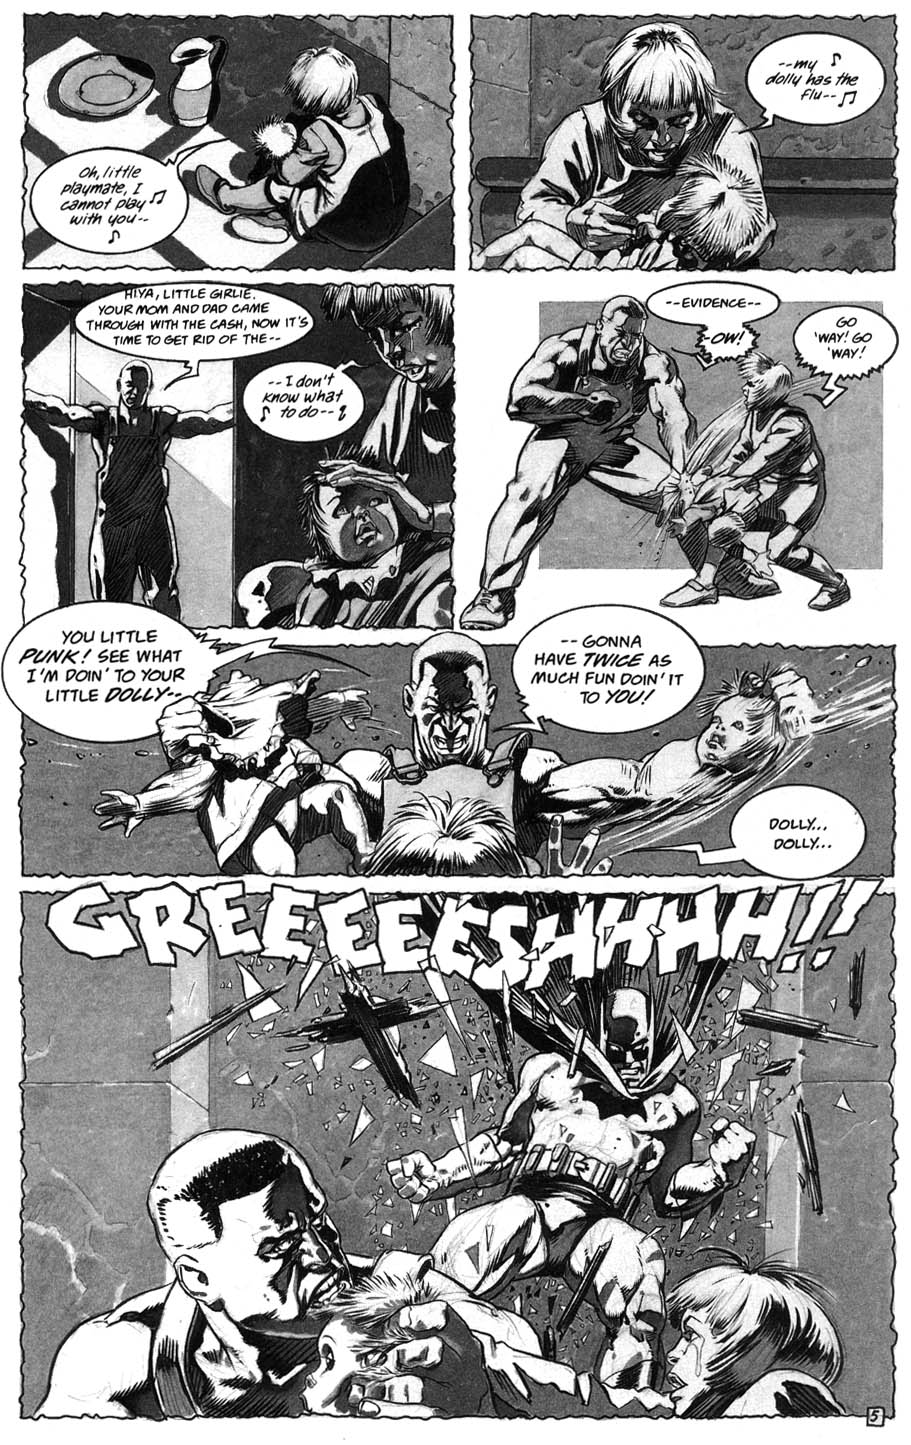 Batman - Black And White 3, Part 1 of 2